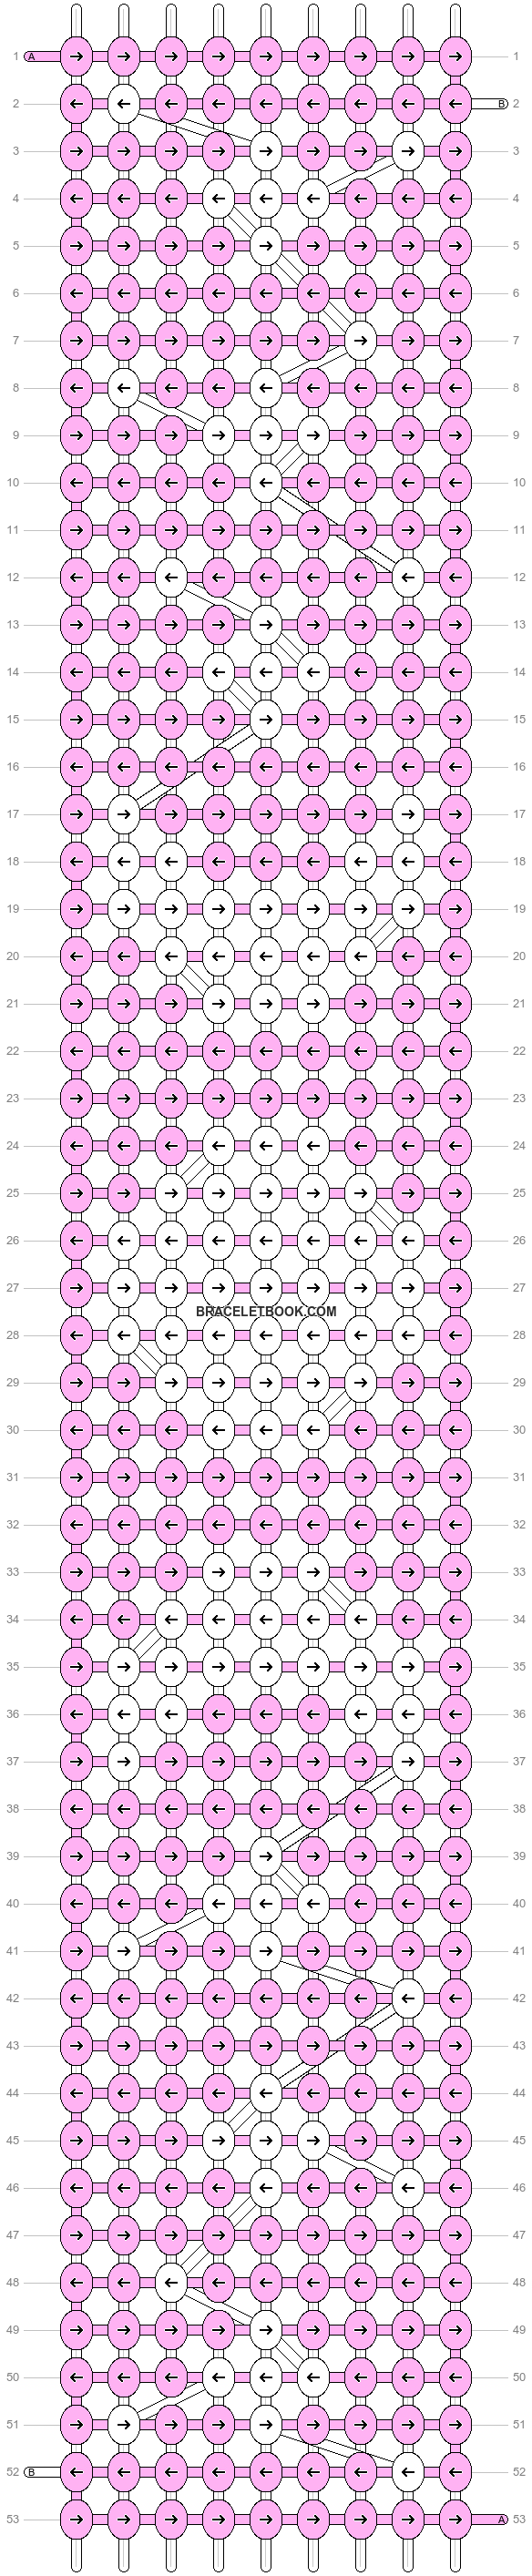 Alpha pattern #40067 variation #96218 pattern